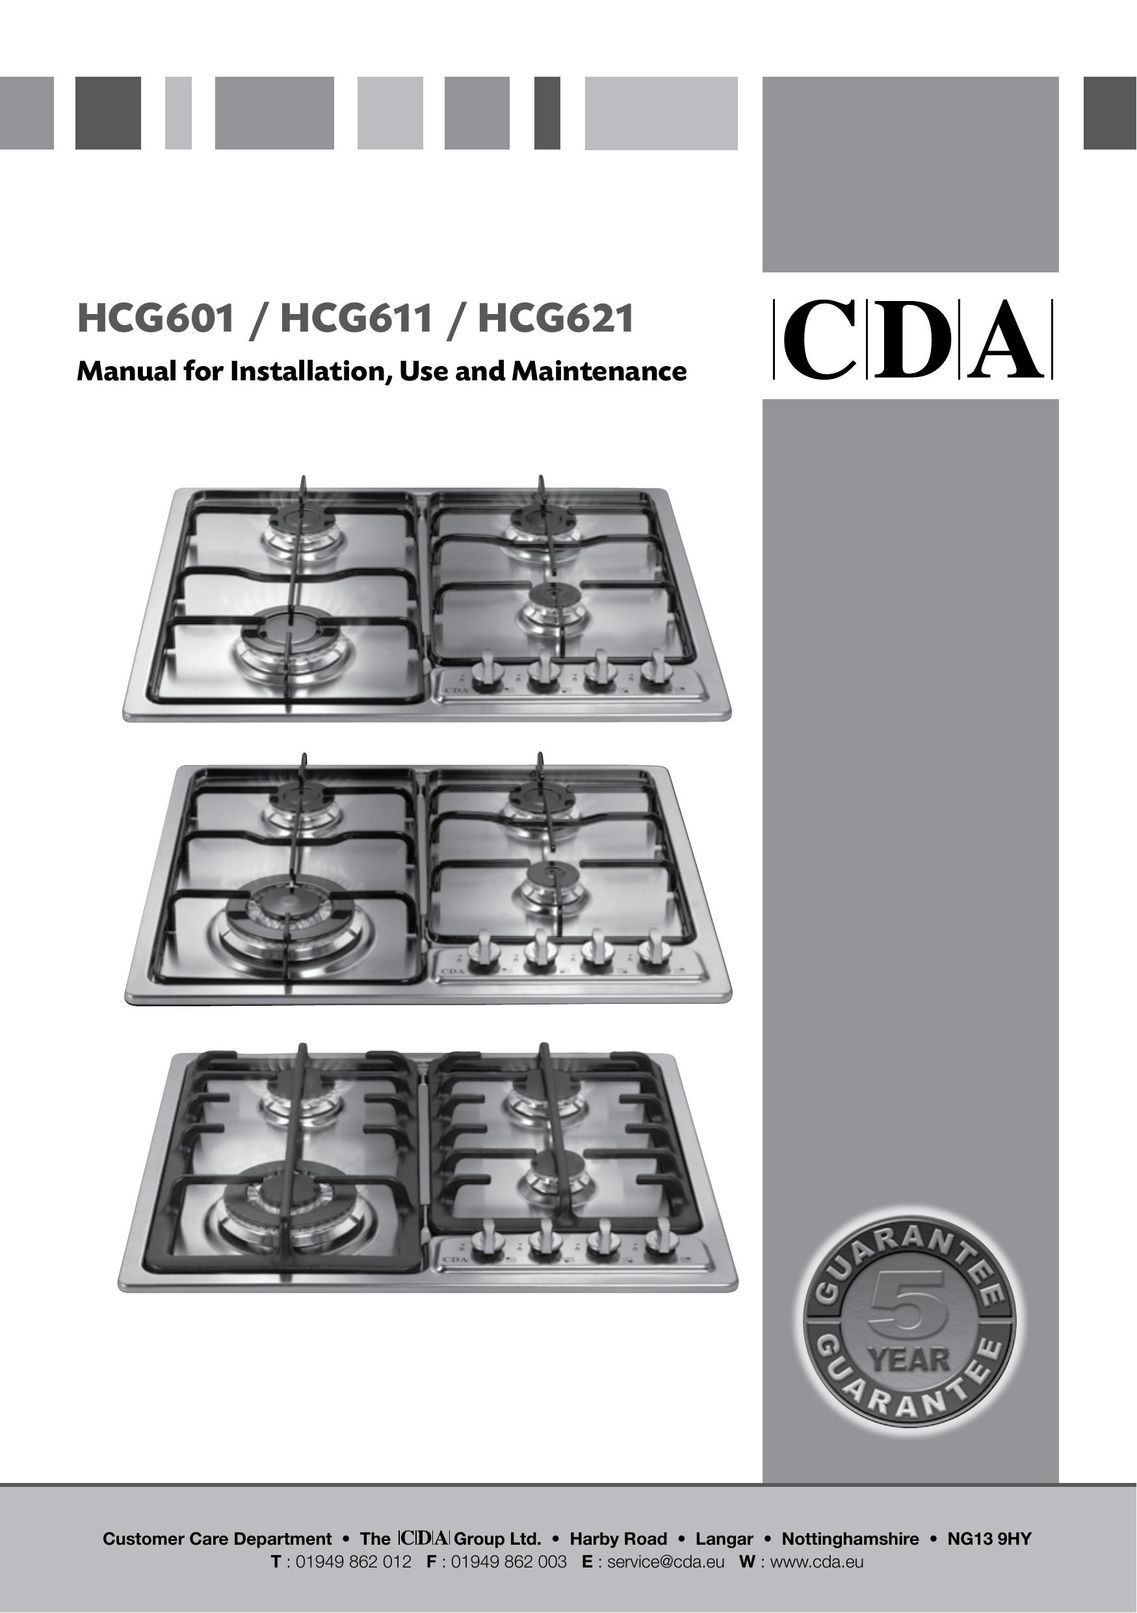 CDA HCG611 Cooktop User Manual